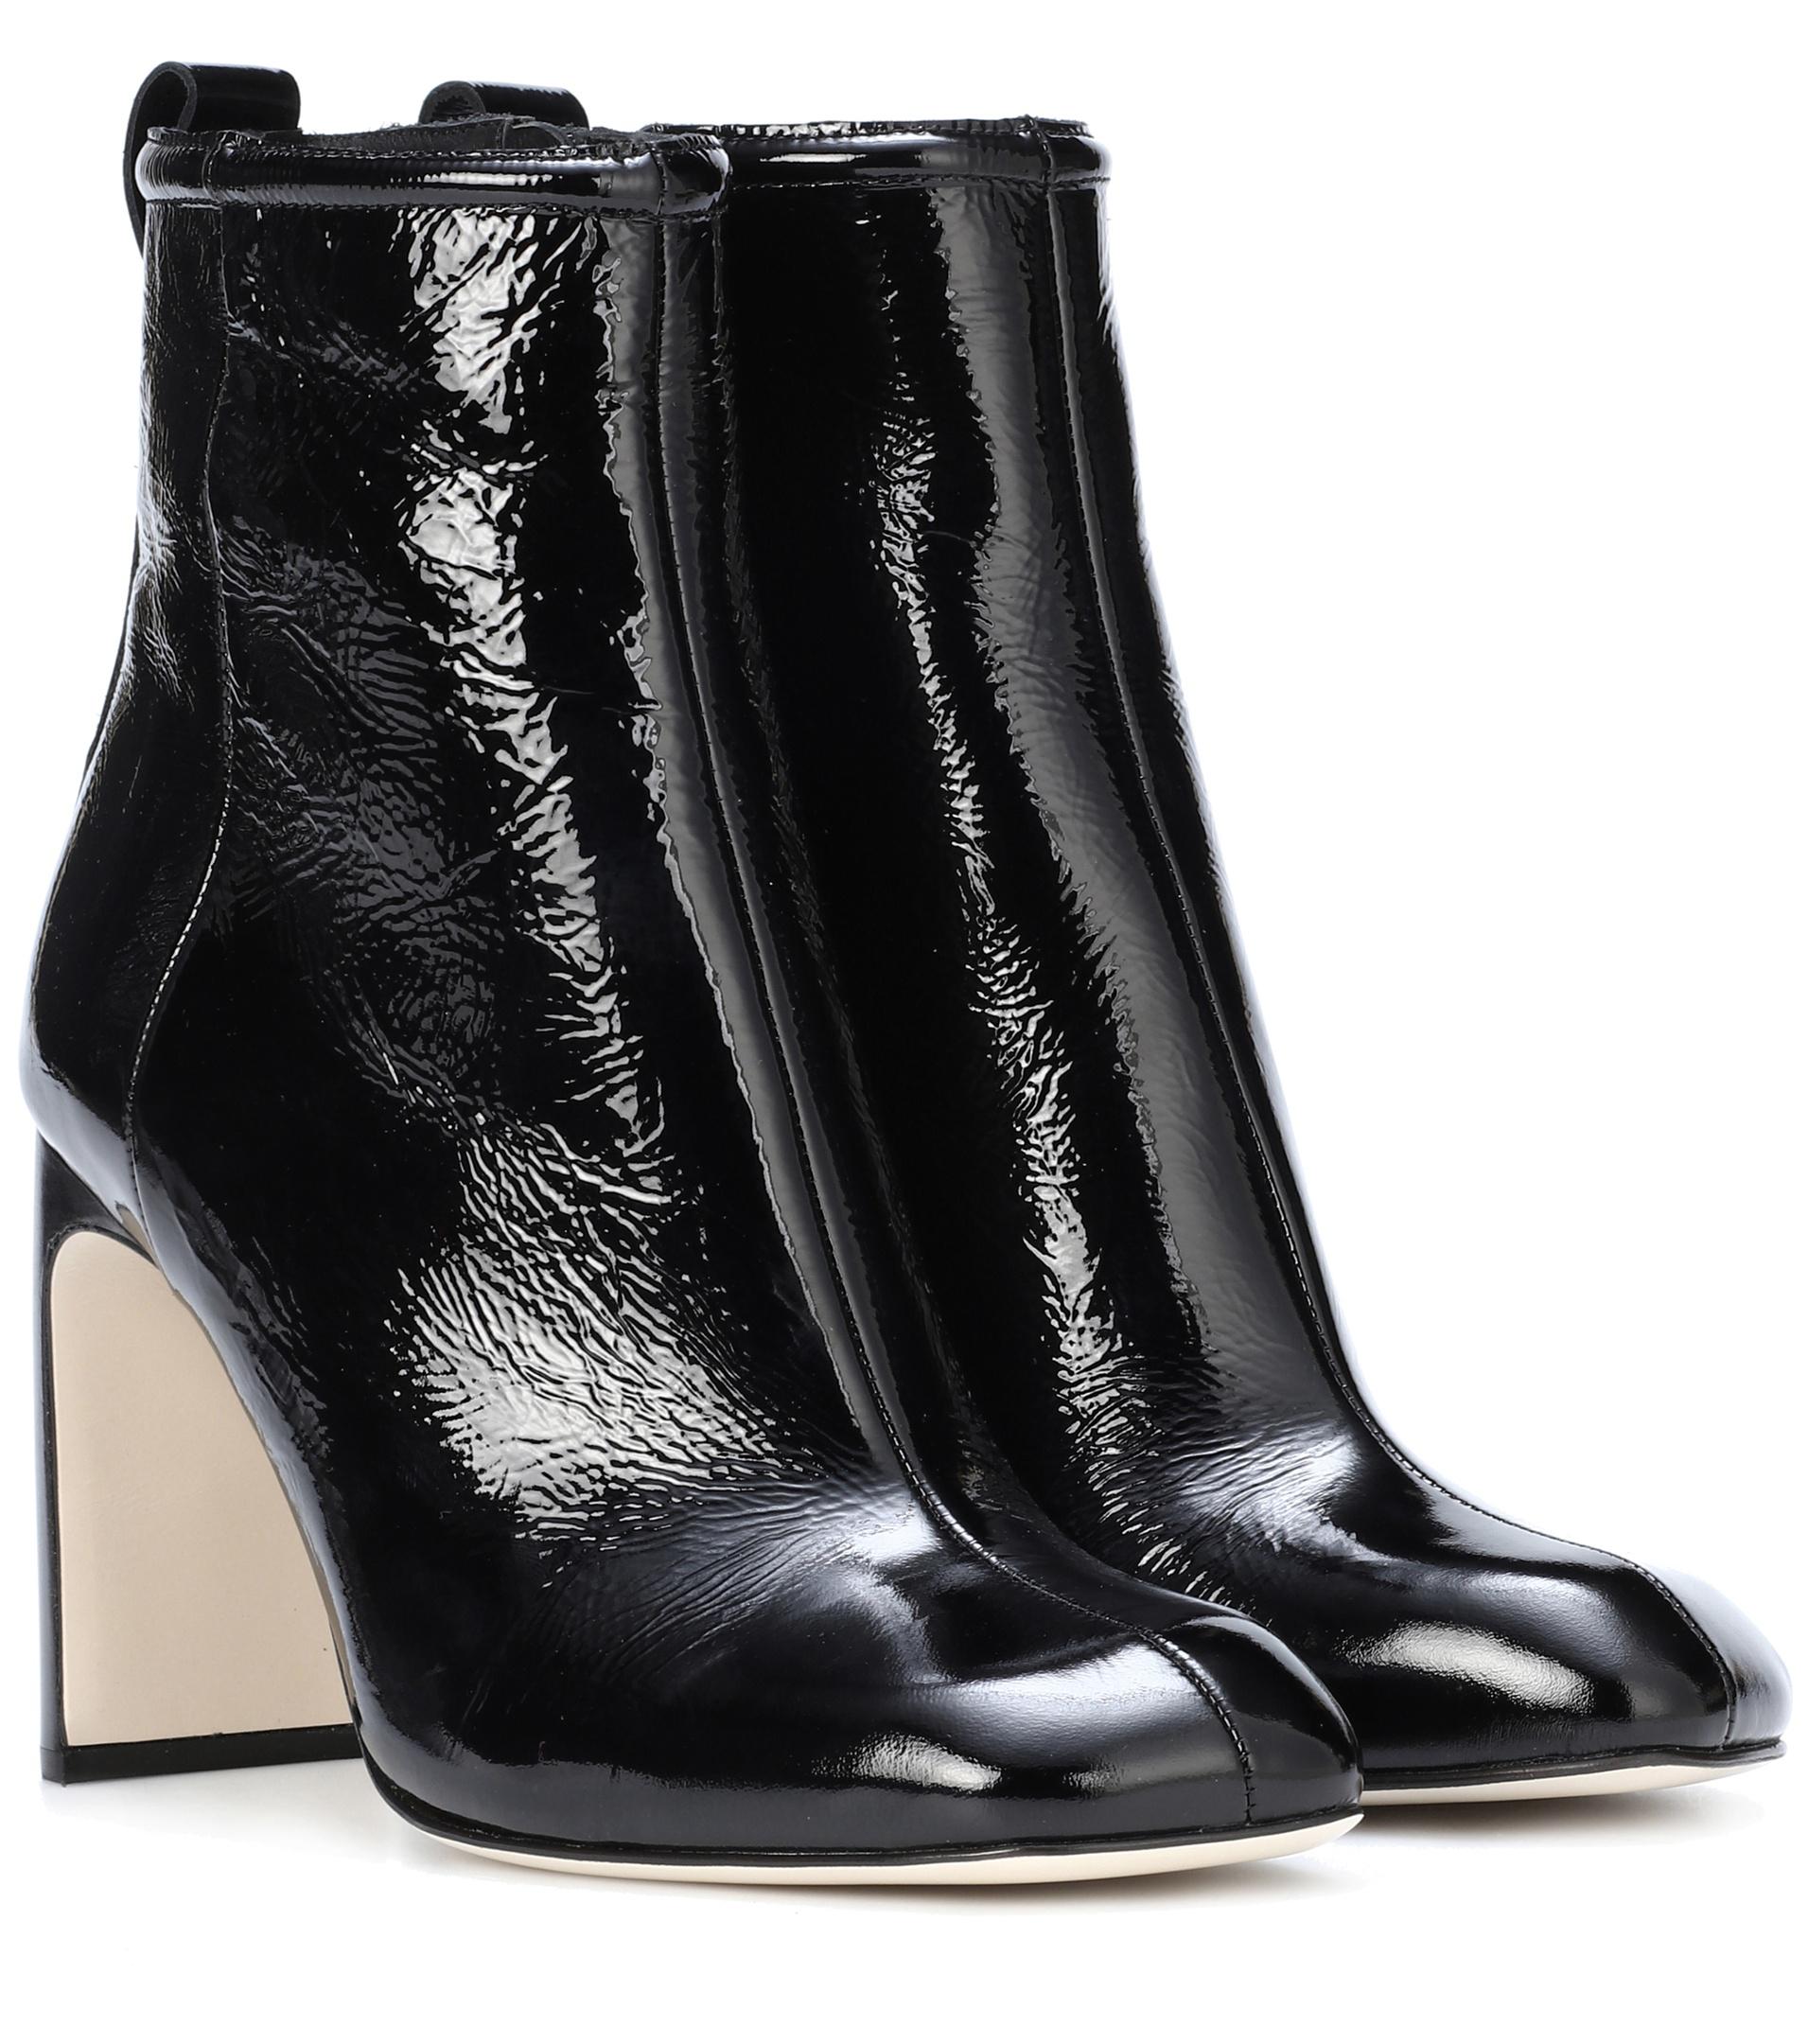 Rag & Bone Ellis Patent Leather Ankle Boots in Black - Lyst